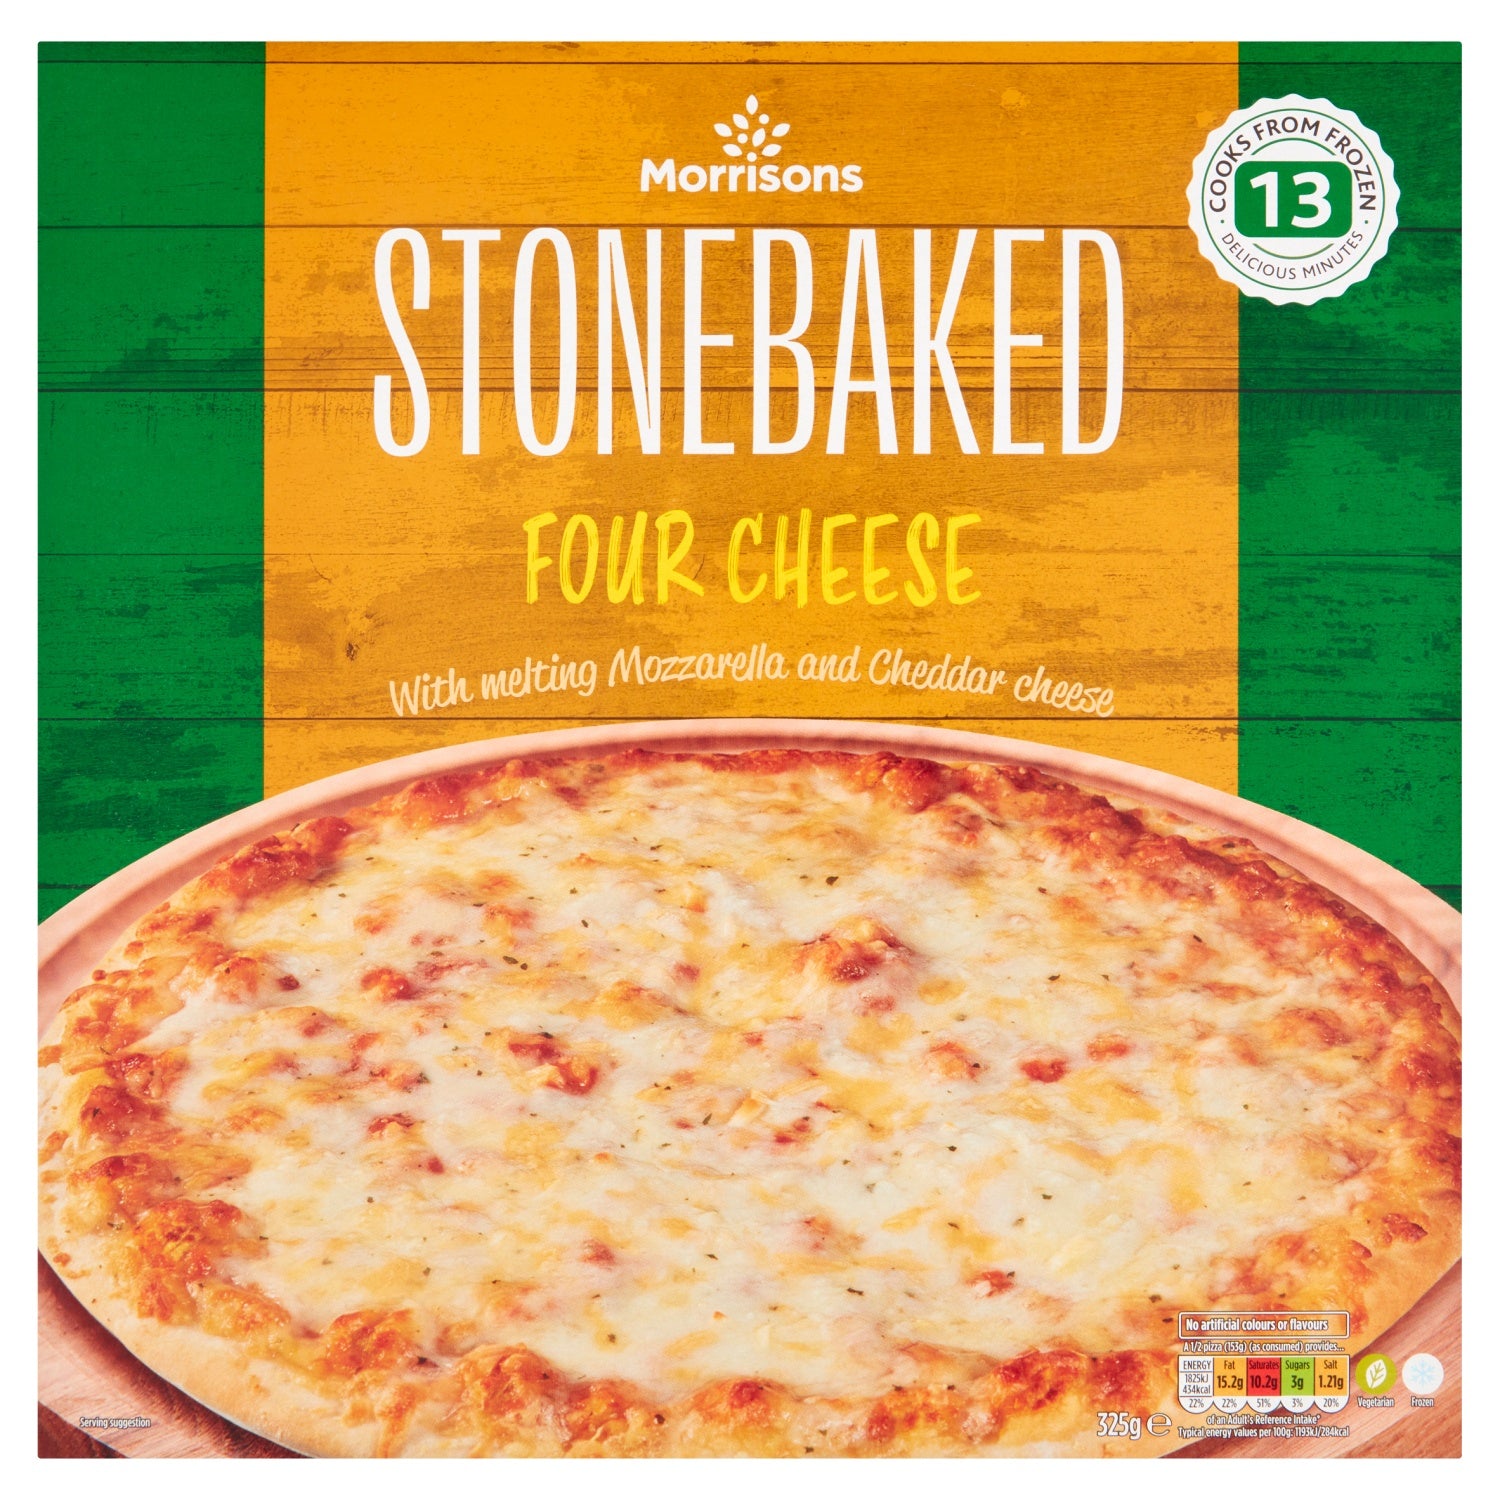 Morrisons Four Cheese Stonebake Pizza 325g